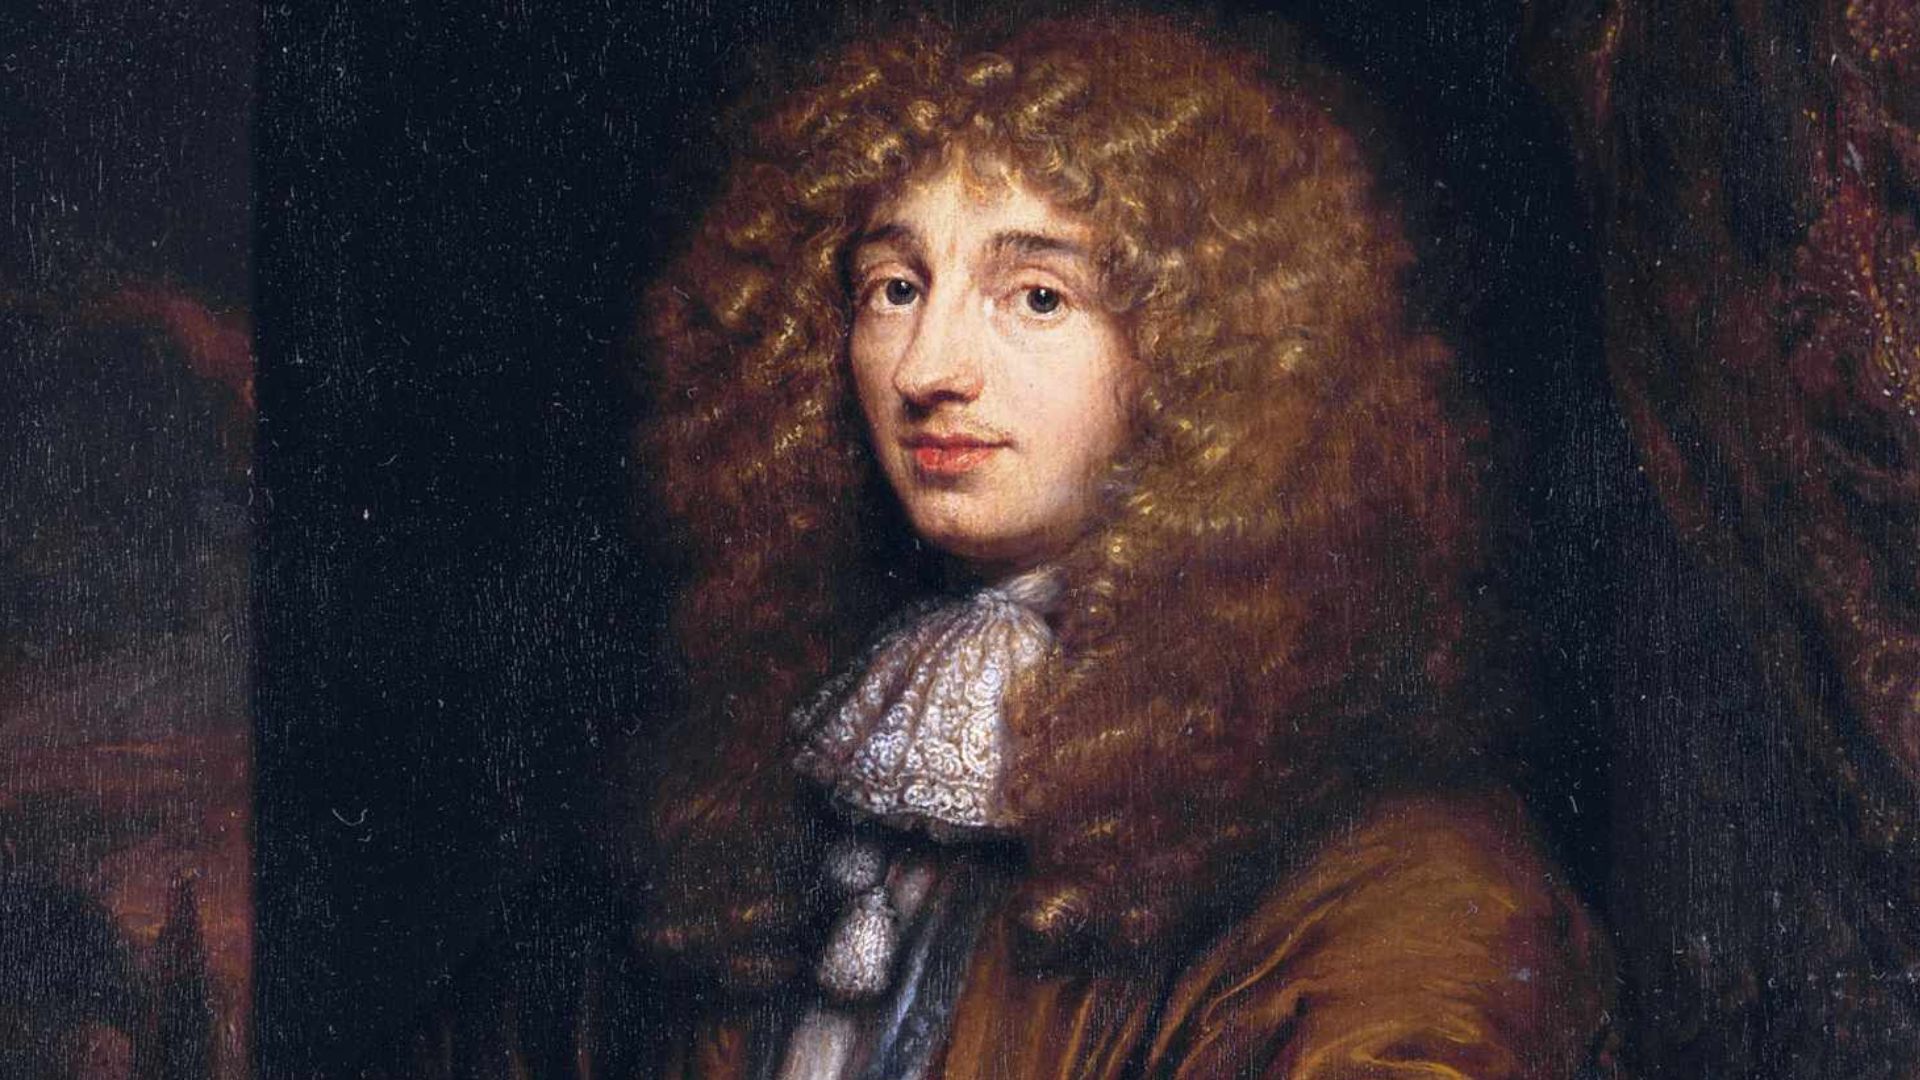 Christiaan Huygens: Matematikawan, Astronom, Fisikawan, dan Penemu Belanda